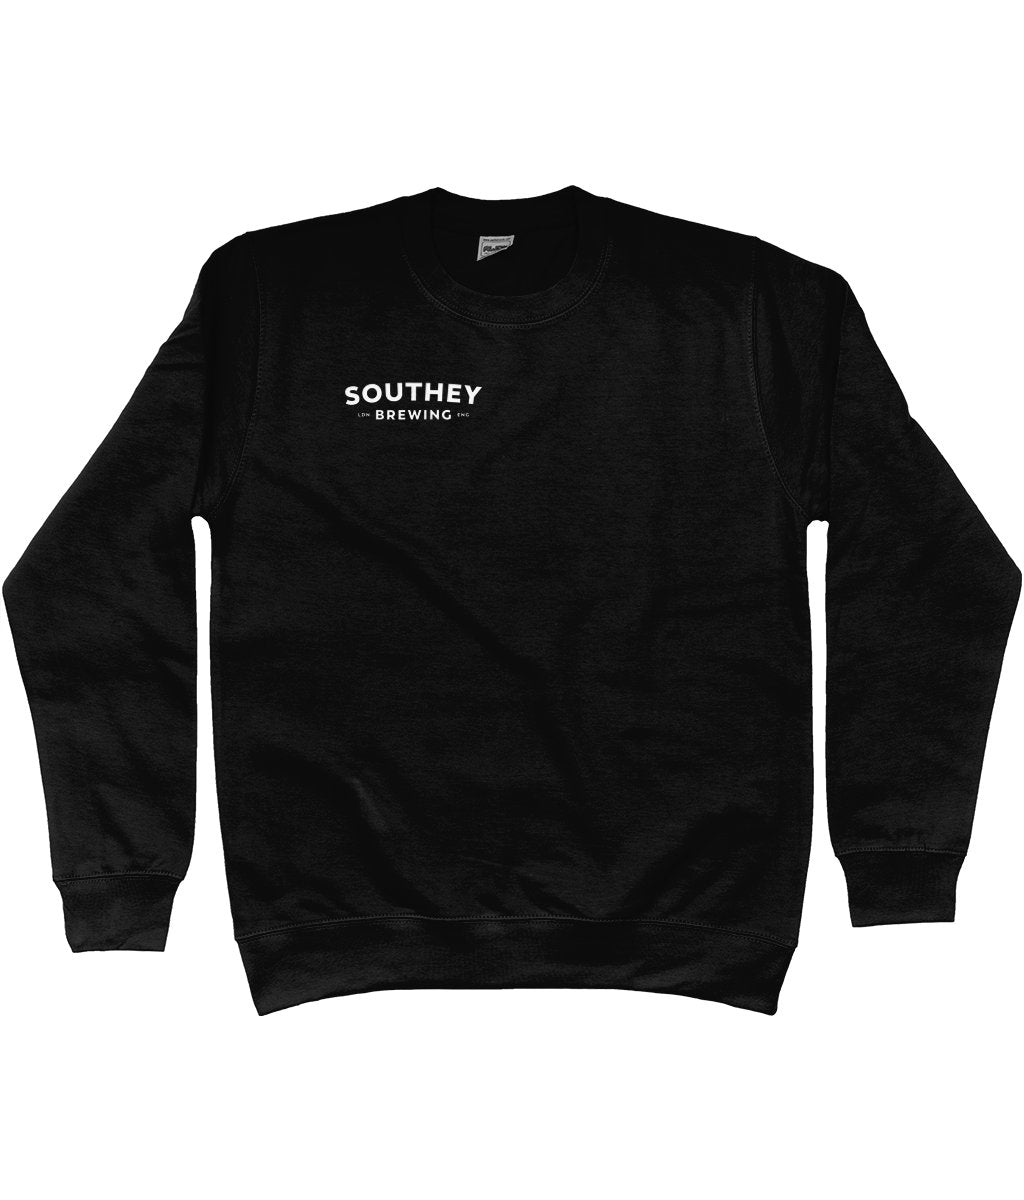 Original Southey Sweatshirt (Black) - Southey Brewery Co.